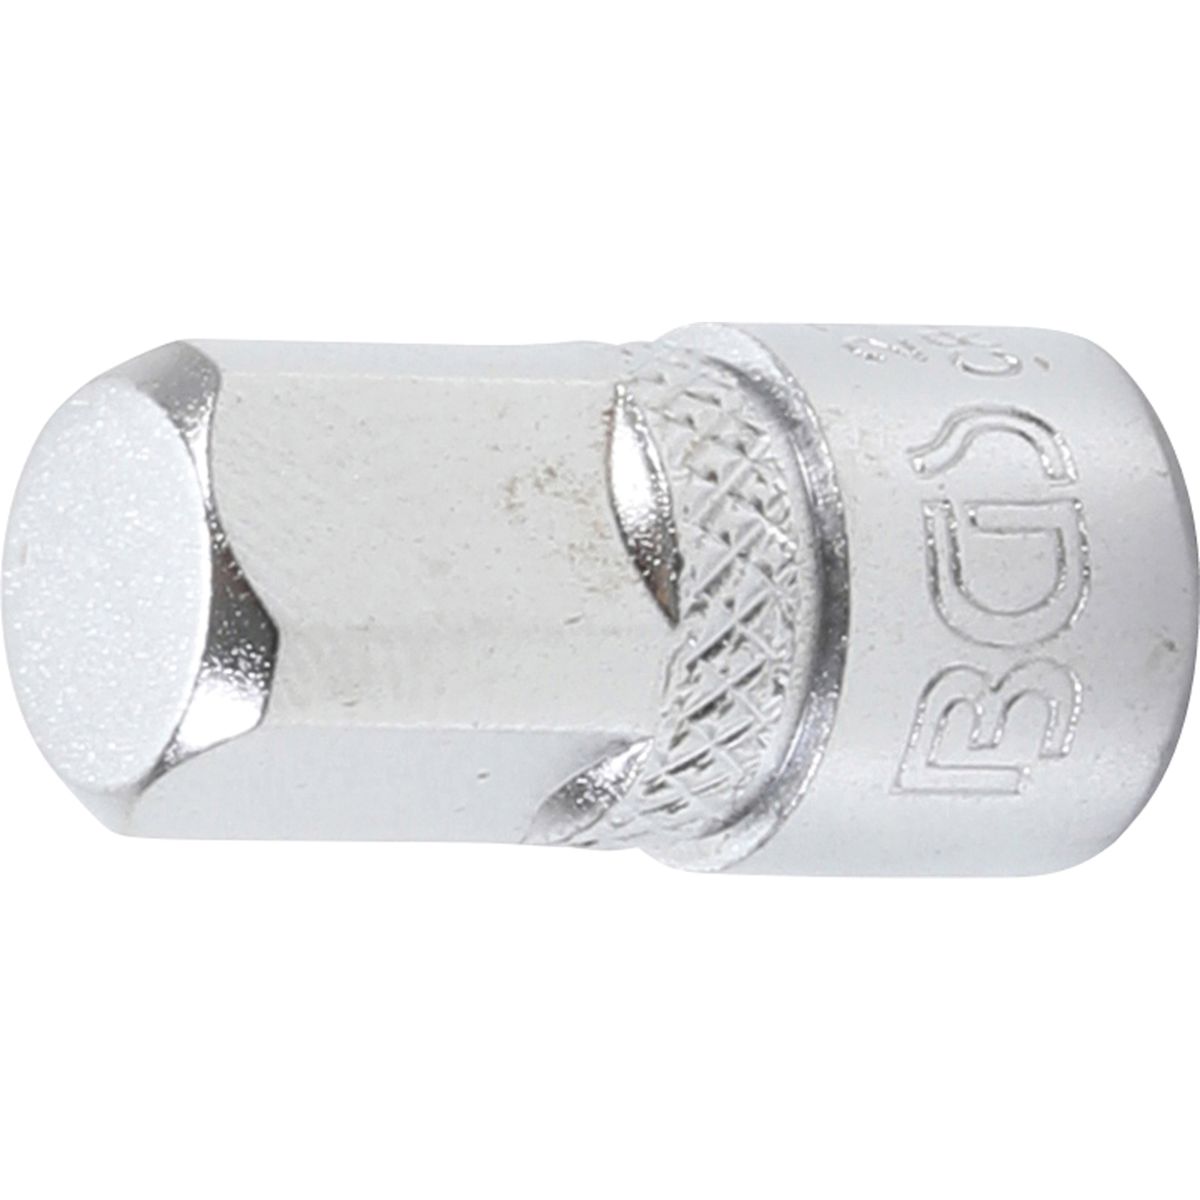 Steckschlüssel-Adapter | Innenvierkant 6,3 mm (1/4") - Außenvierkant 10 mm (3/8")